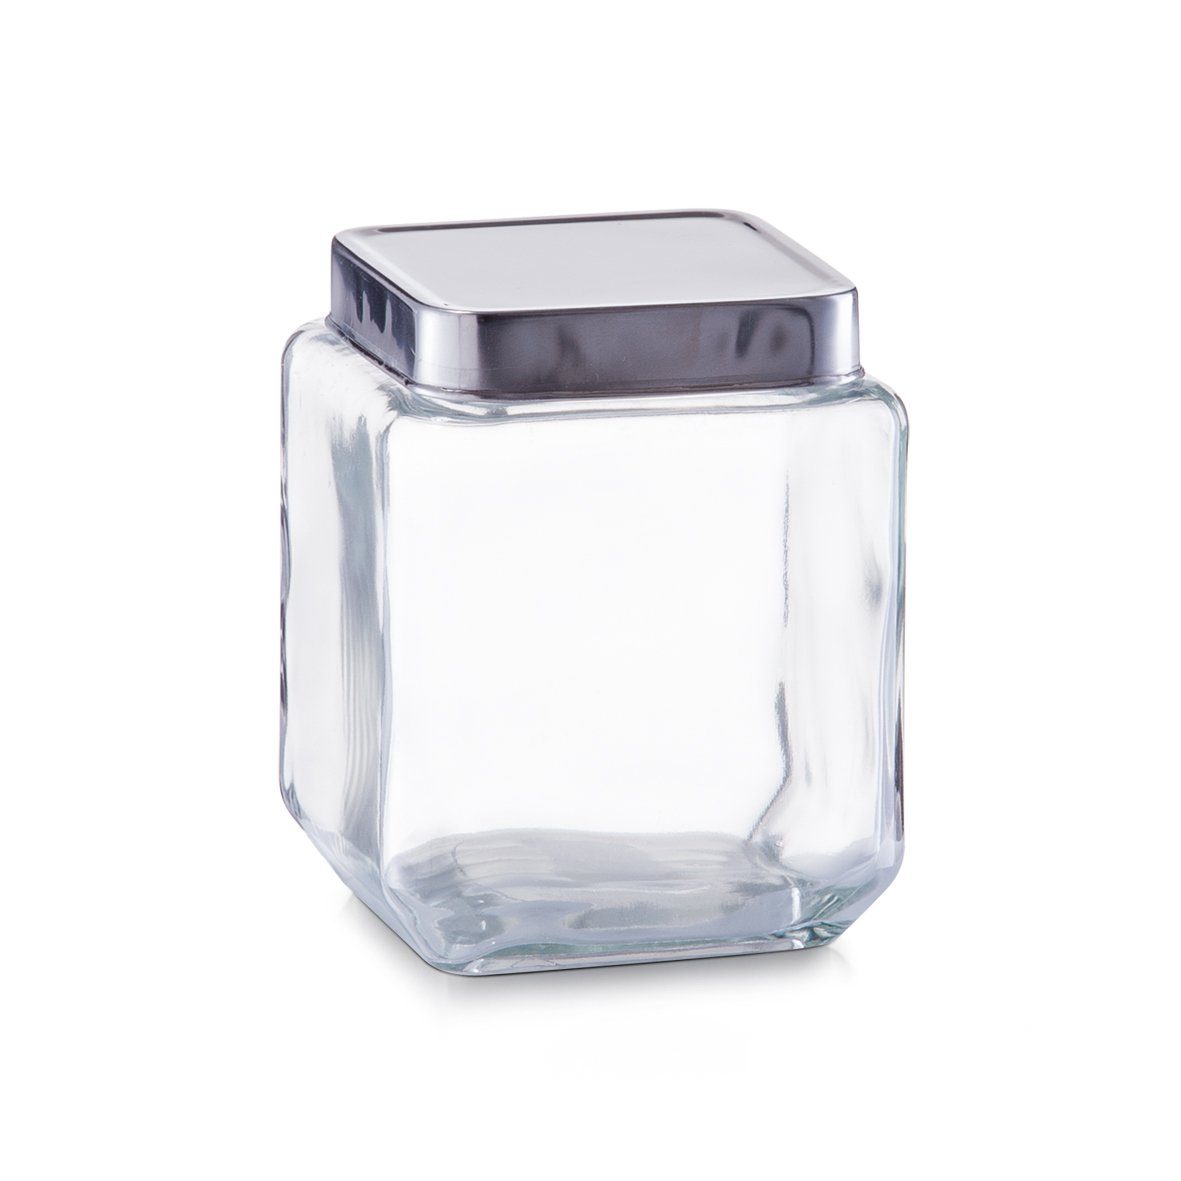 Zeller Present Vorratsglas Vorratsglas m. Edelstahldeckel, Glas/Edelstahl 18/0, 1100 ml, Glas/Edelstahl 18/0, transparent, 11 x 11 x 14 cm